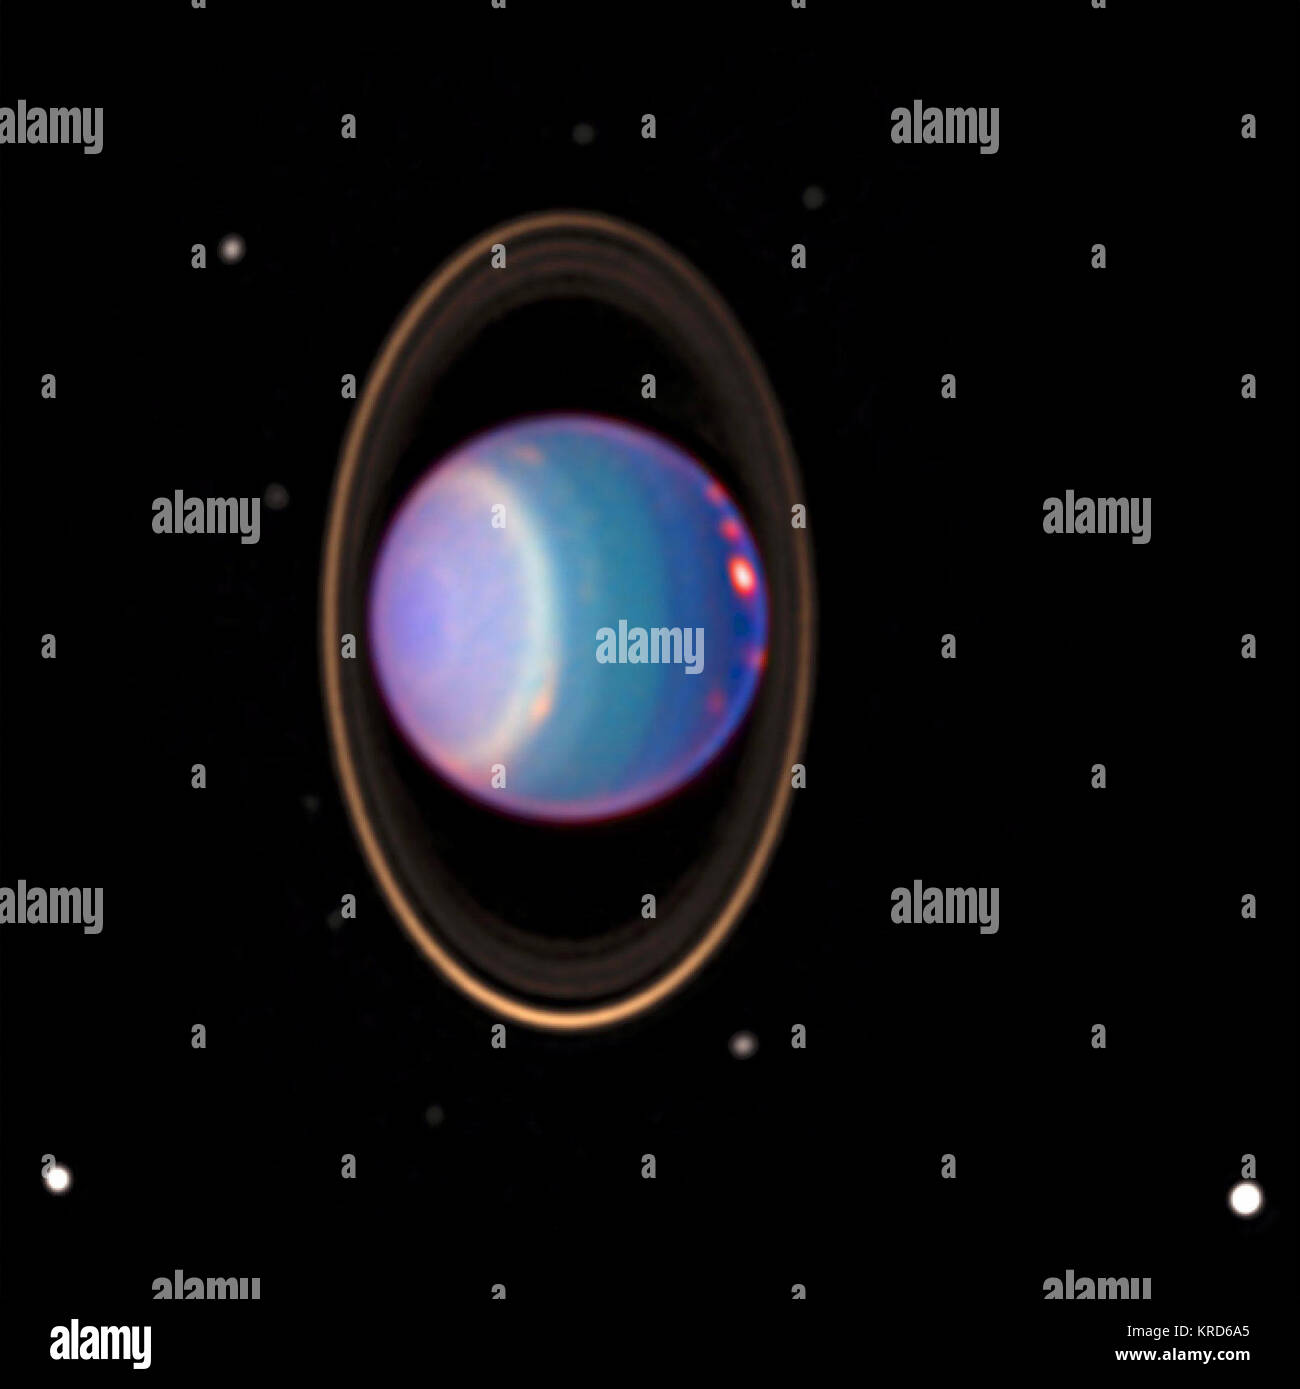 Hubble Observes the Planet Uranus - PICRYL - Public Domain Media Search  Engine Public Domain Search